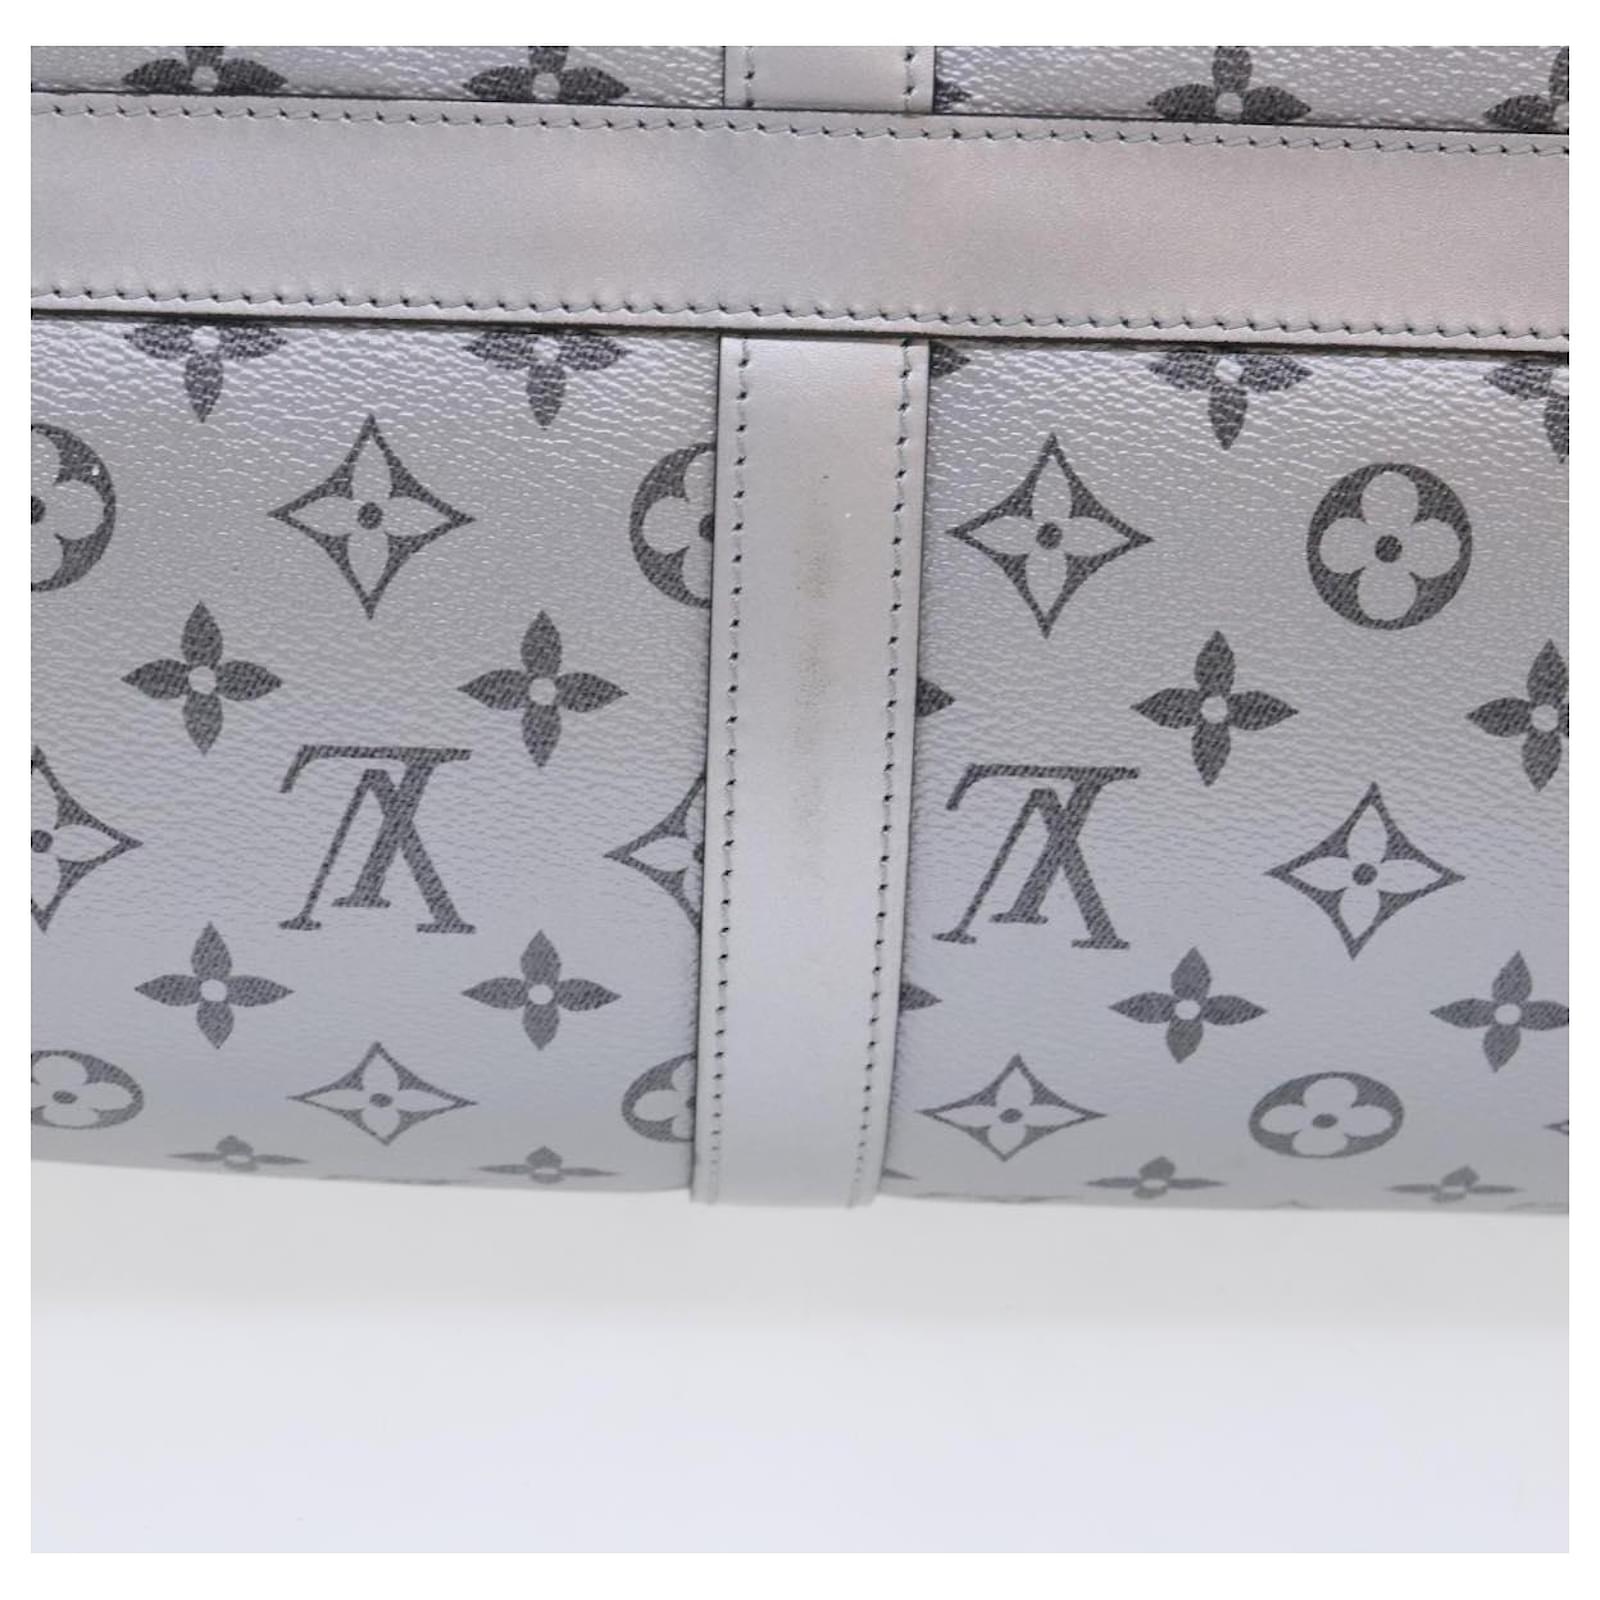 Handbags Louis Vuitton Louis Vuitton Eclipse Split Keepall Bandouliere 50 Boston Bag M43817 Auth 46325a